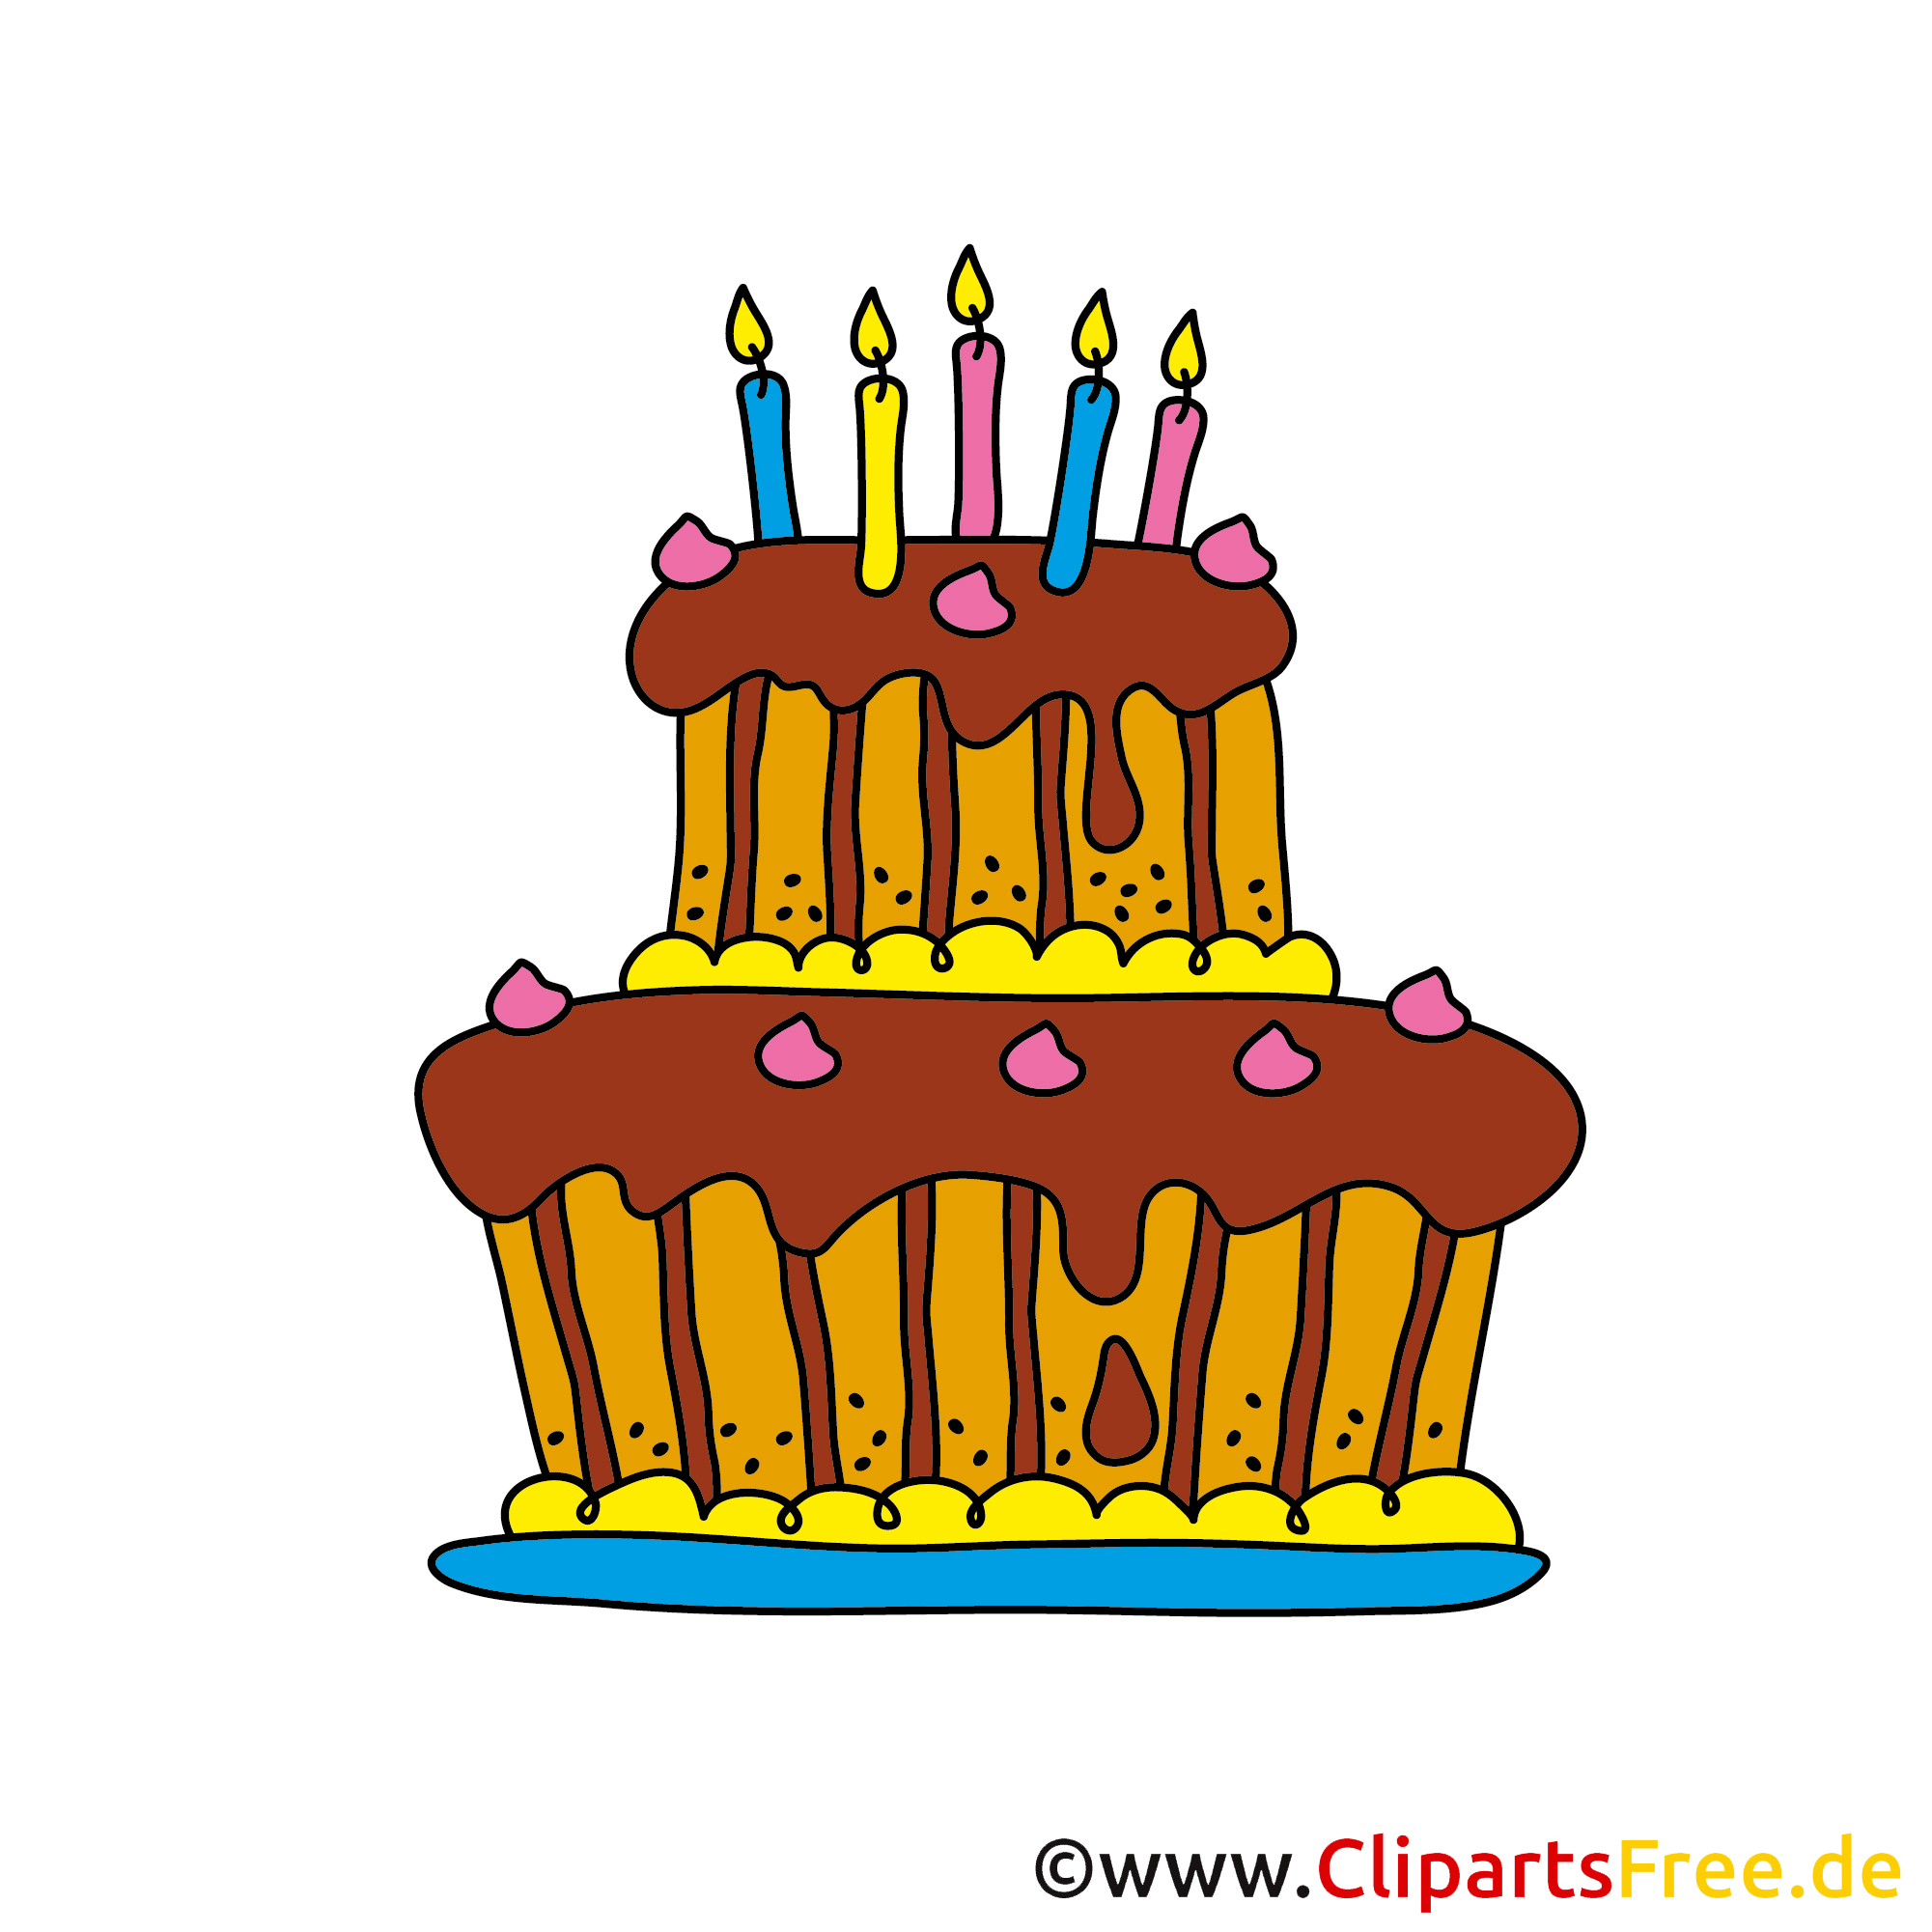 clipart torte gratis - photo #10